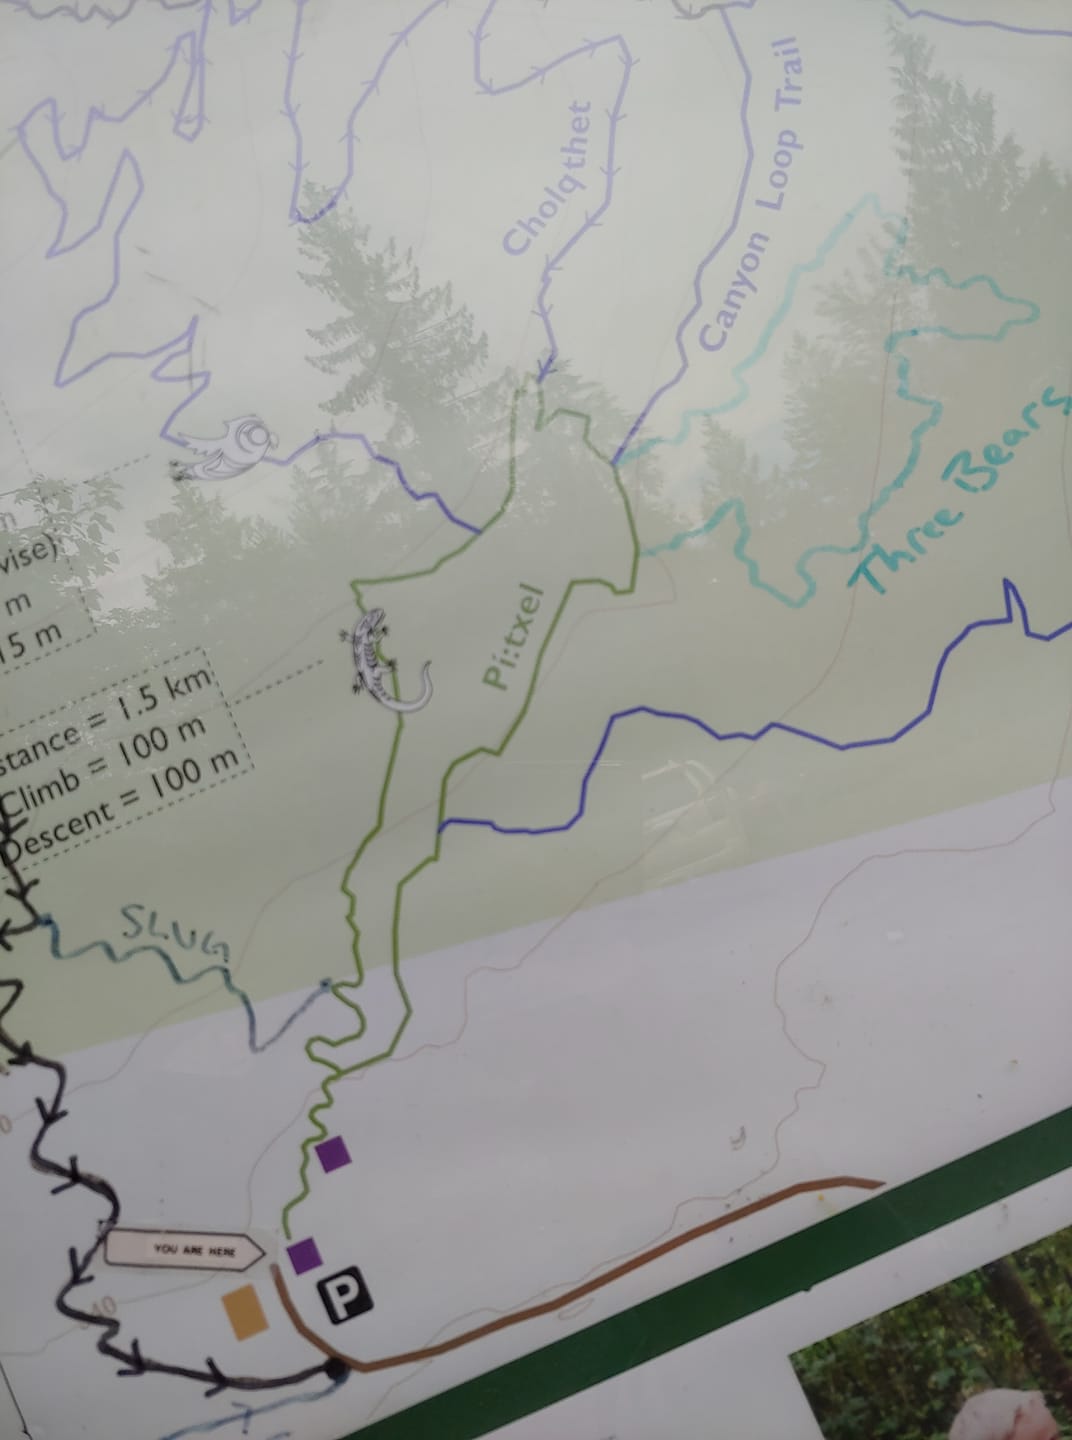 chilliwack community forest trail